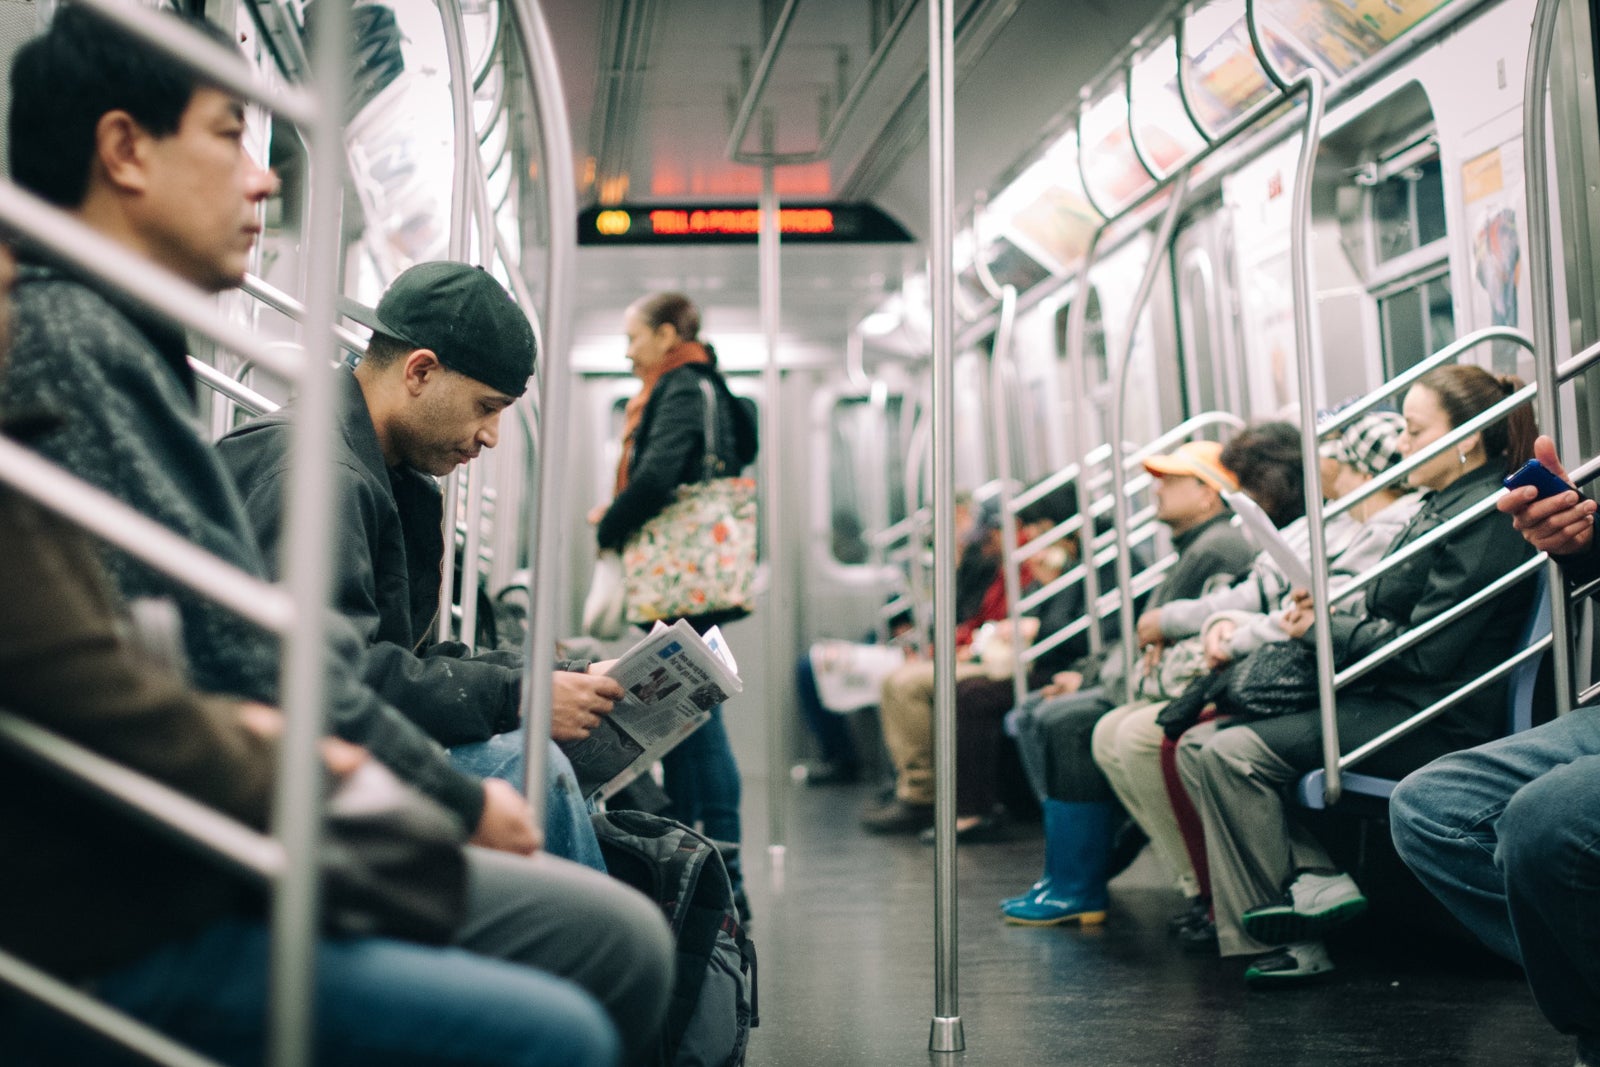 passengers visible inside a New York City subway car